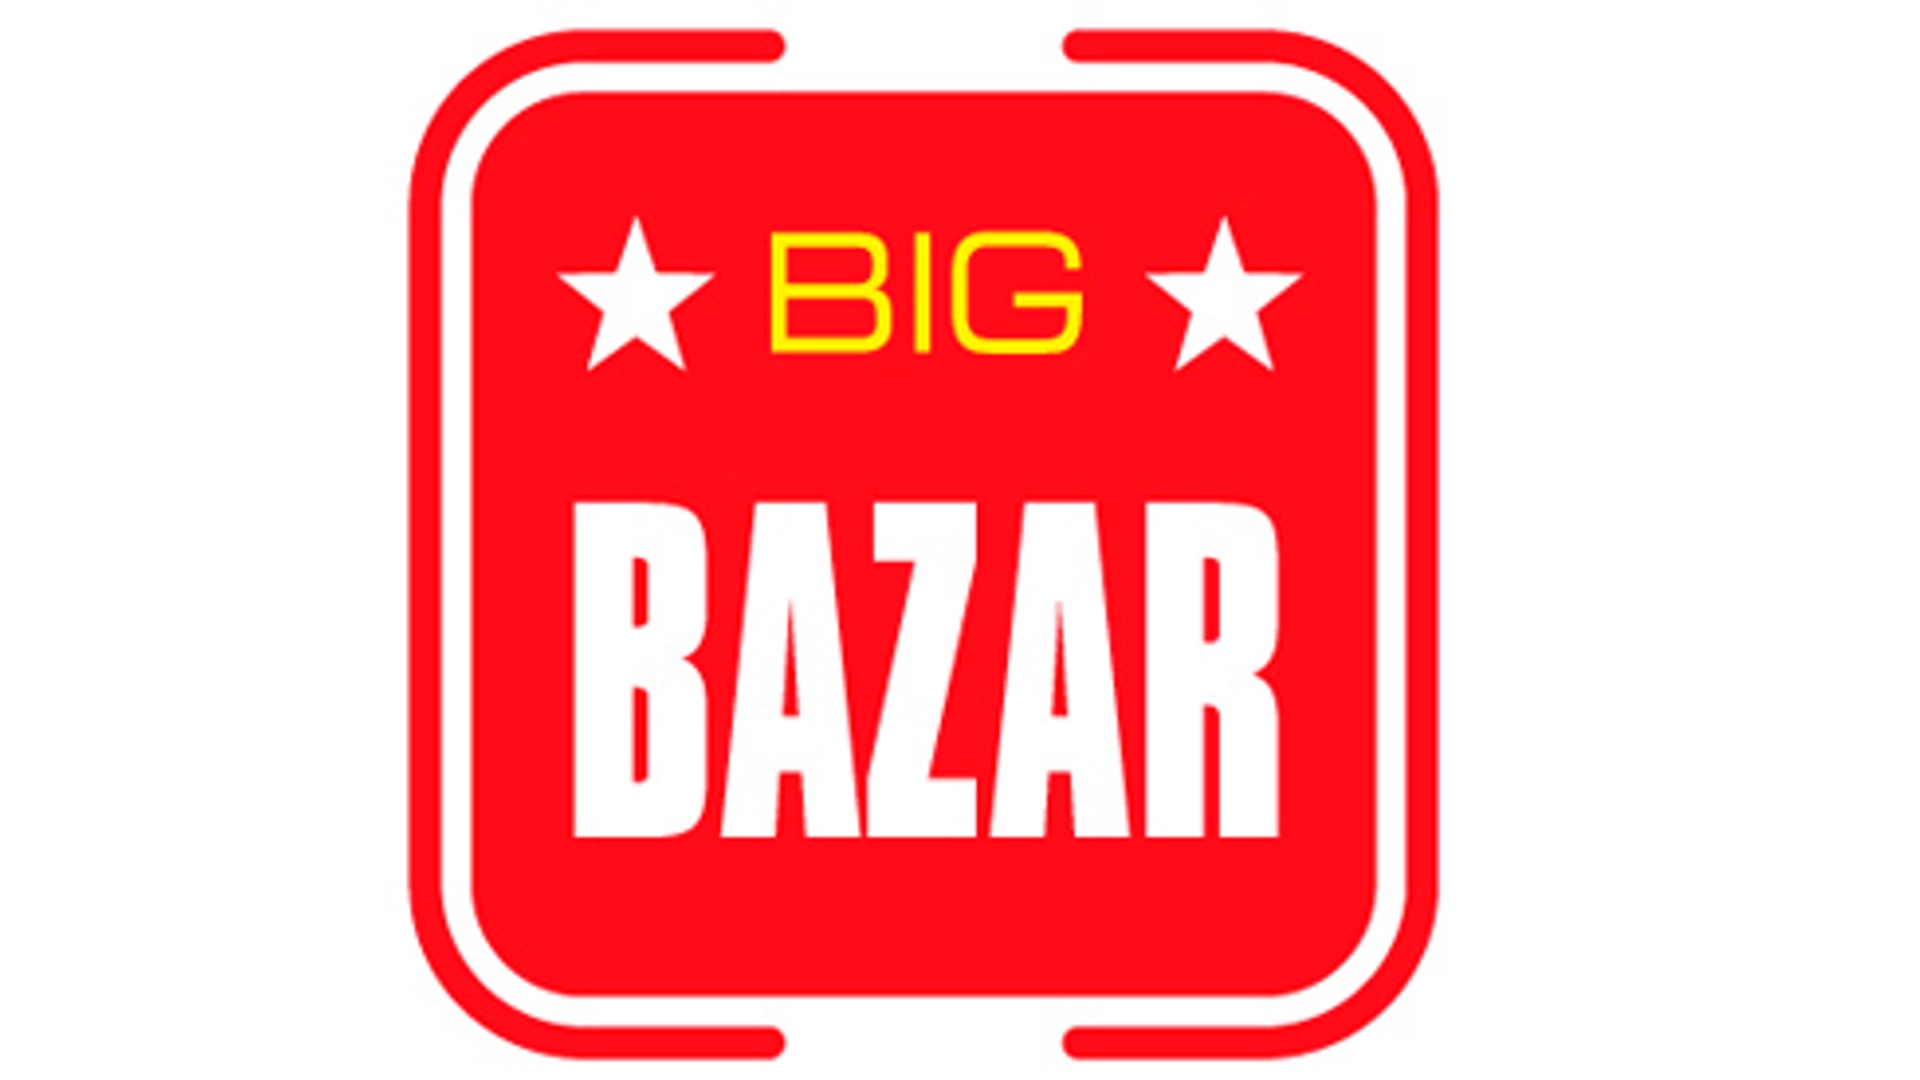 logo_bigbazar.jpg